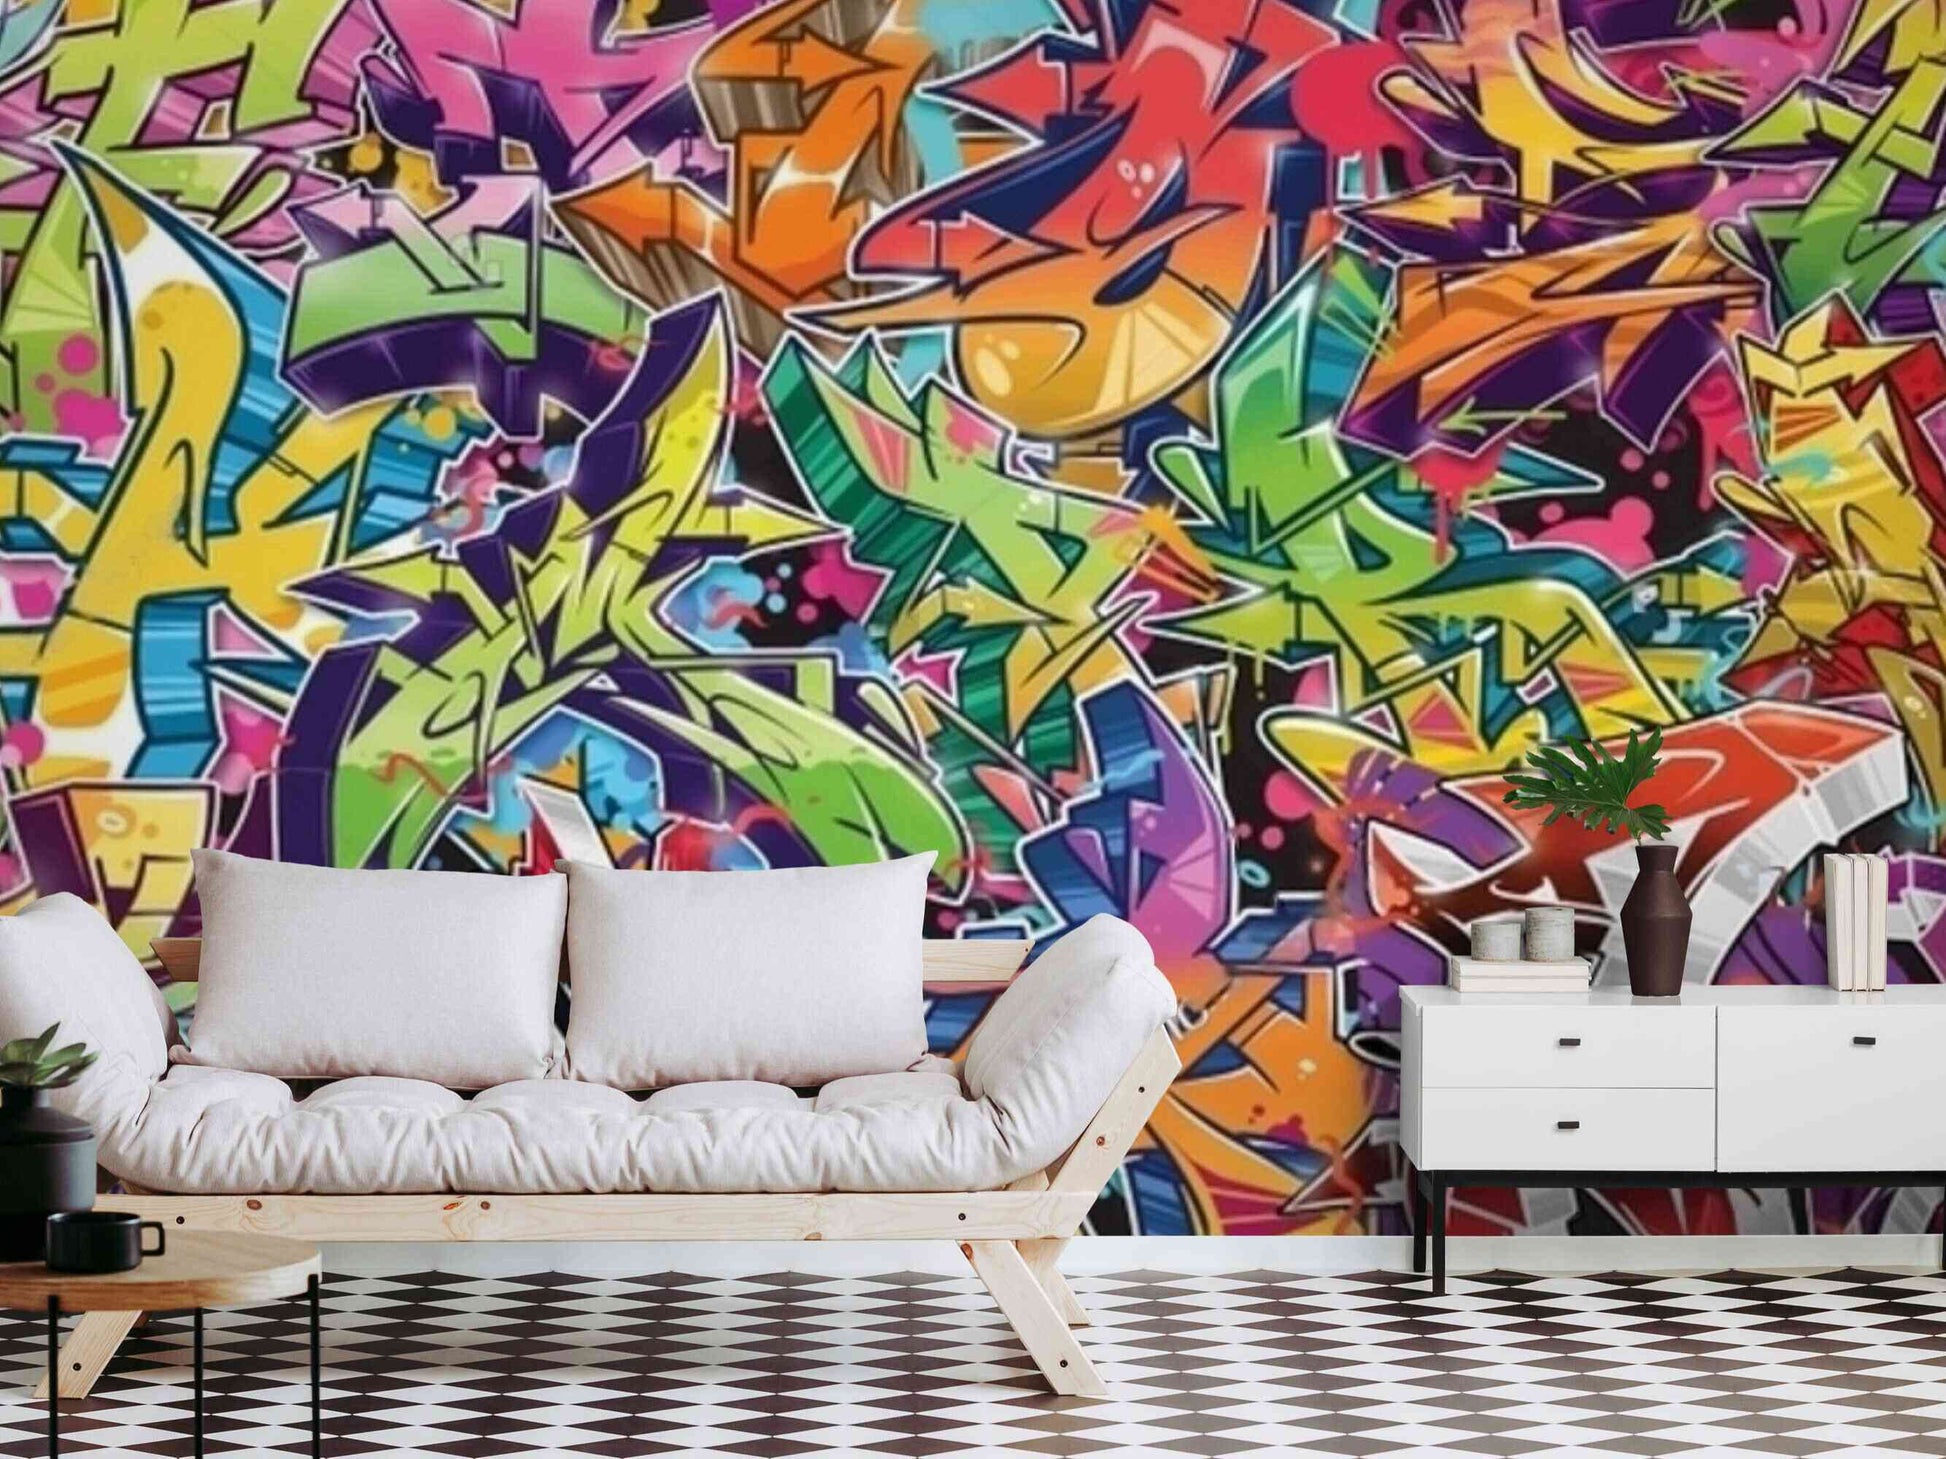 Room showcasing the bold graffiti wallpaper mural design